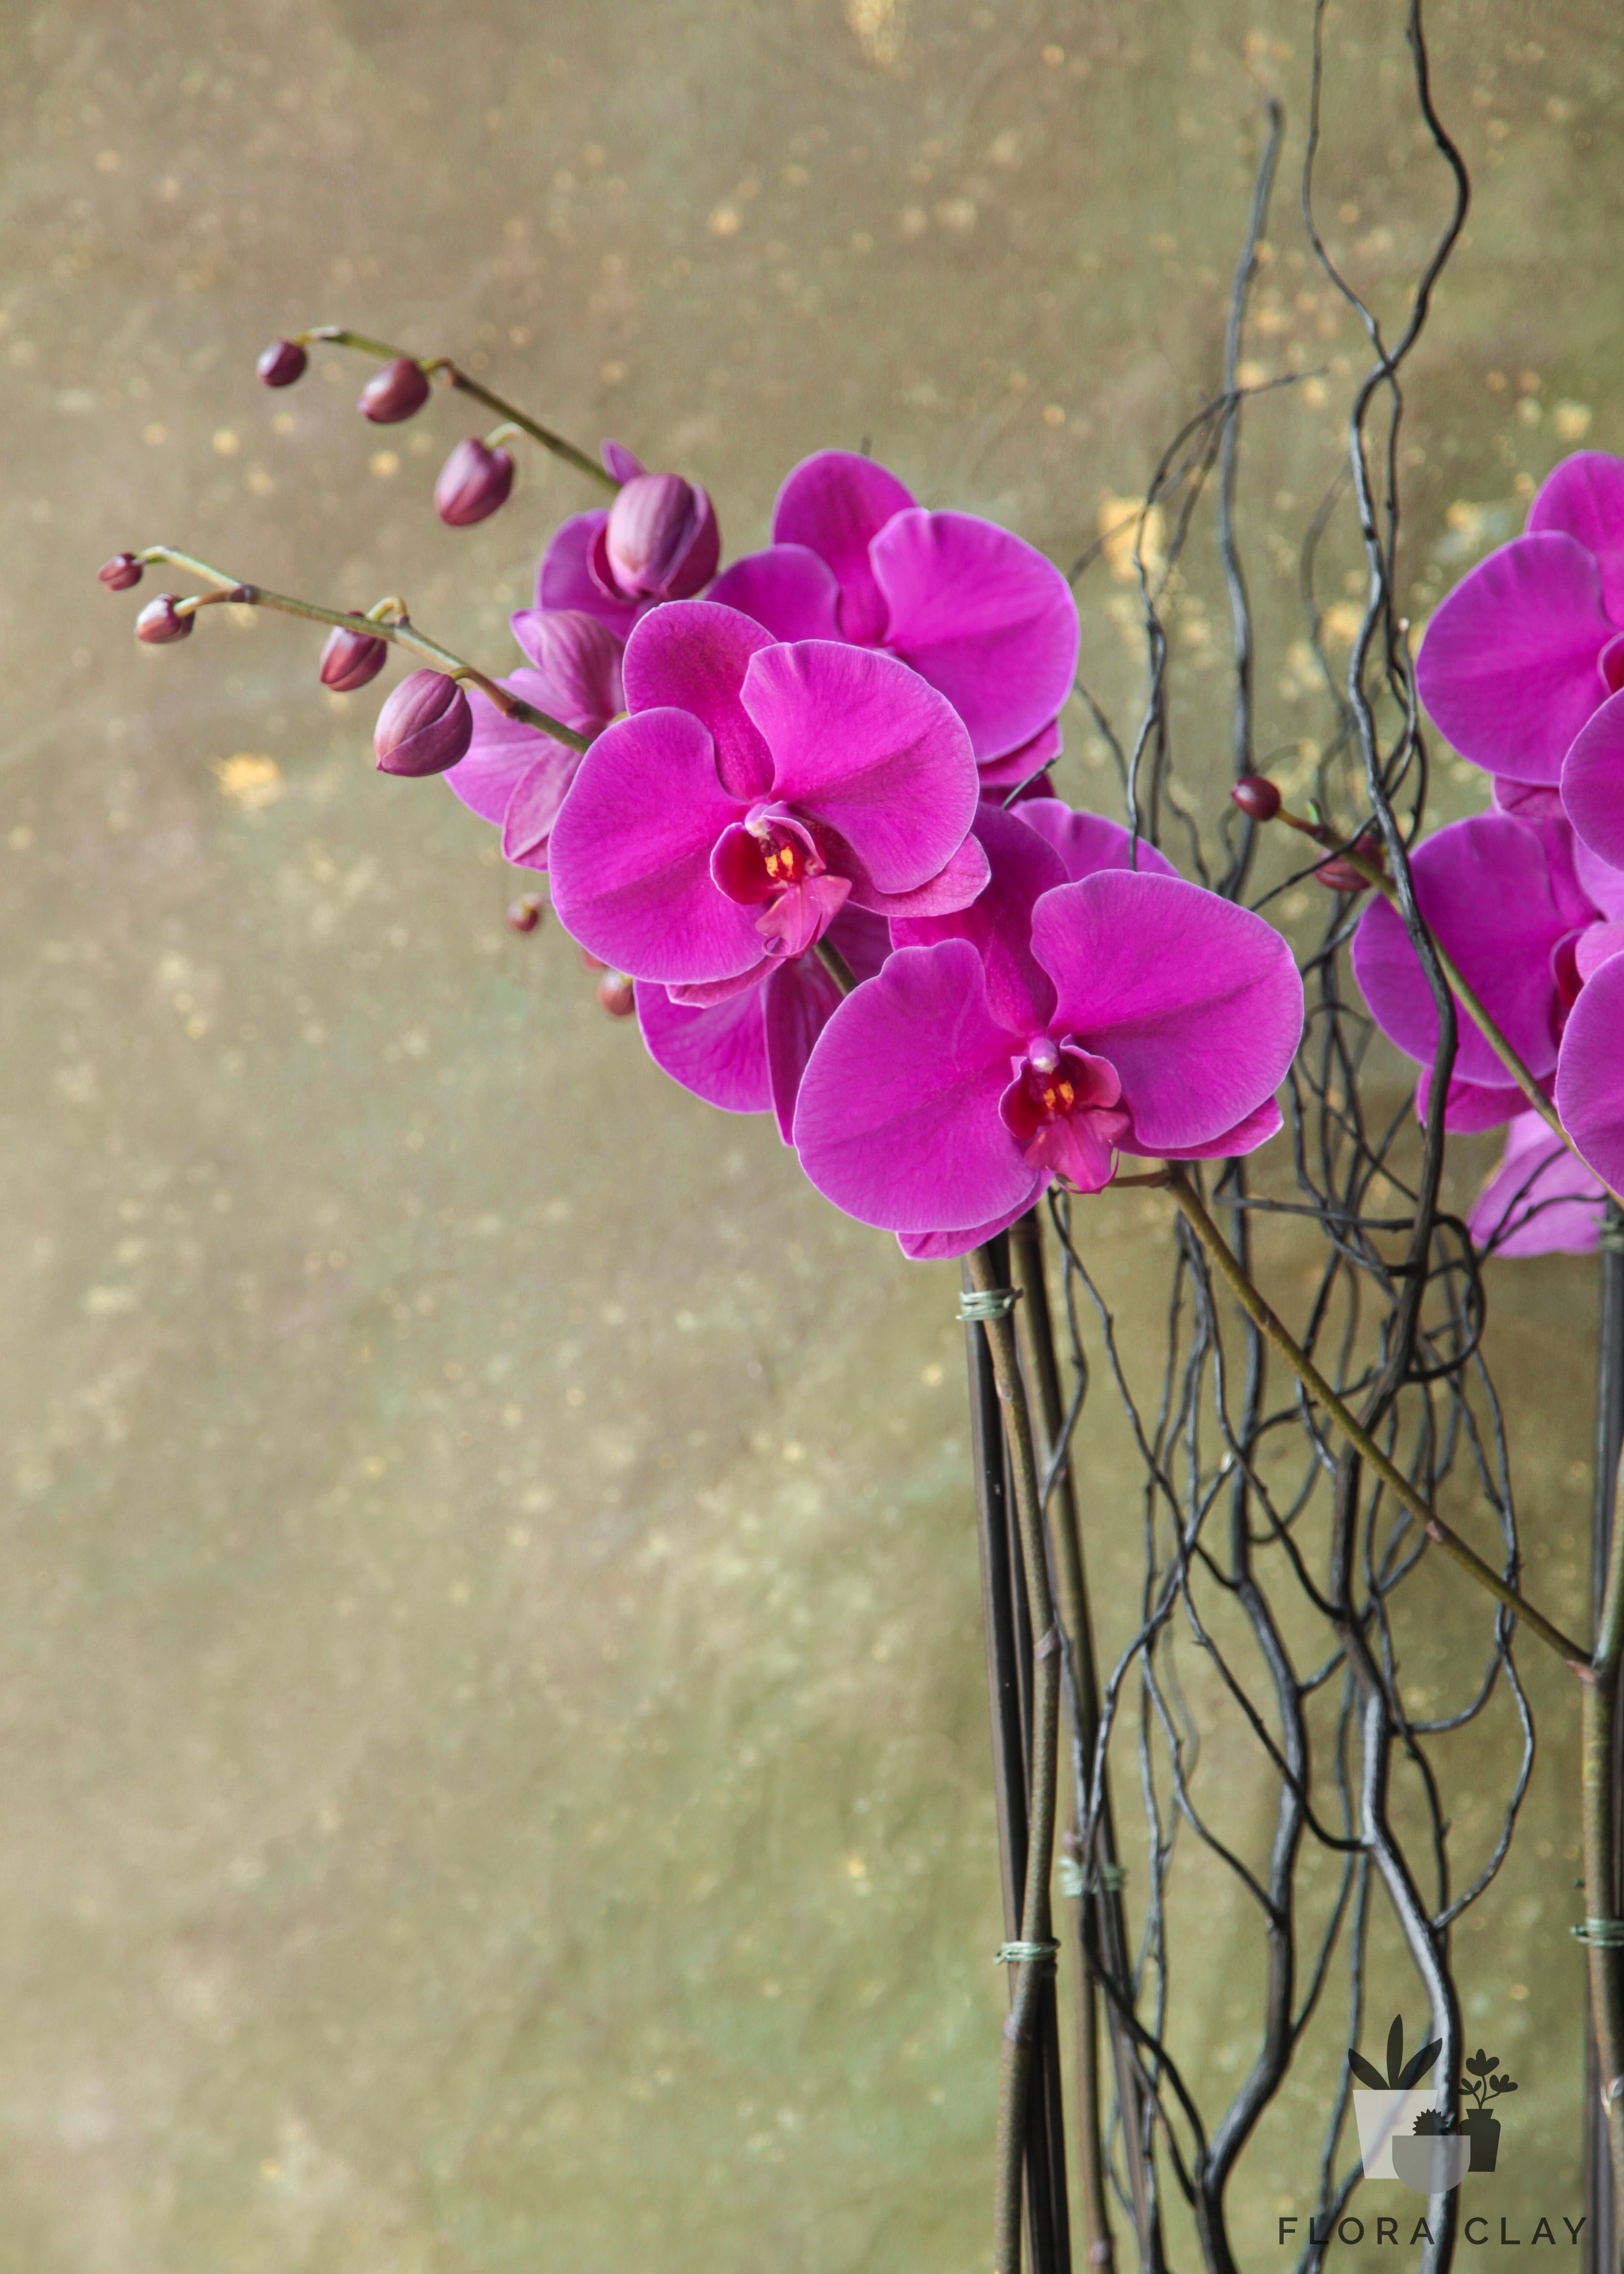 pink-venus-orchid-arrangement-floraclay-2.jpg